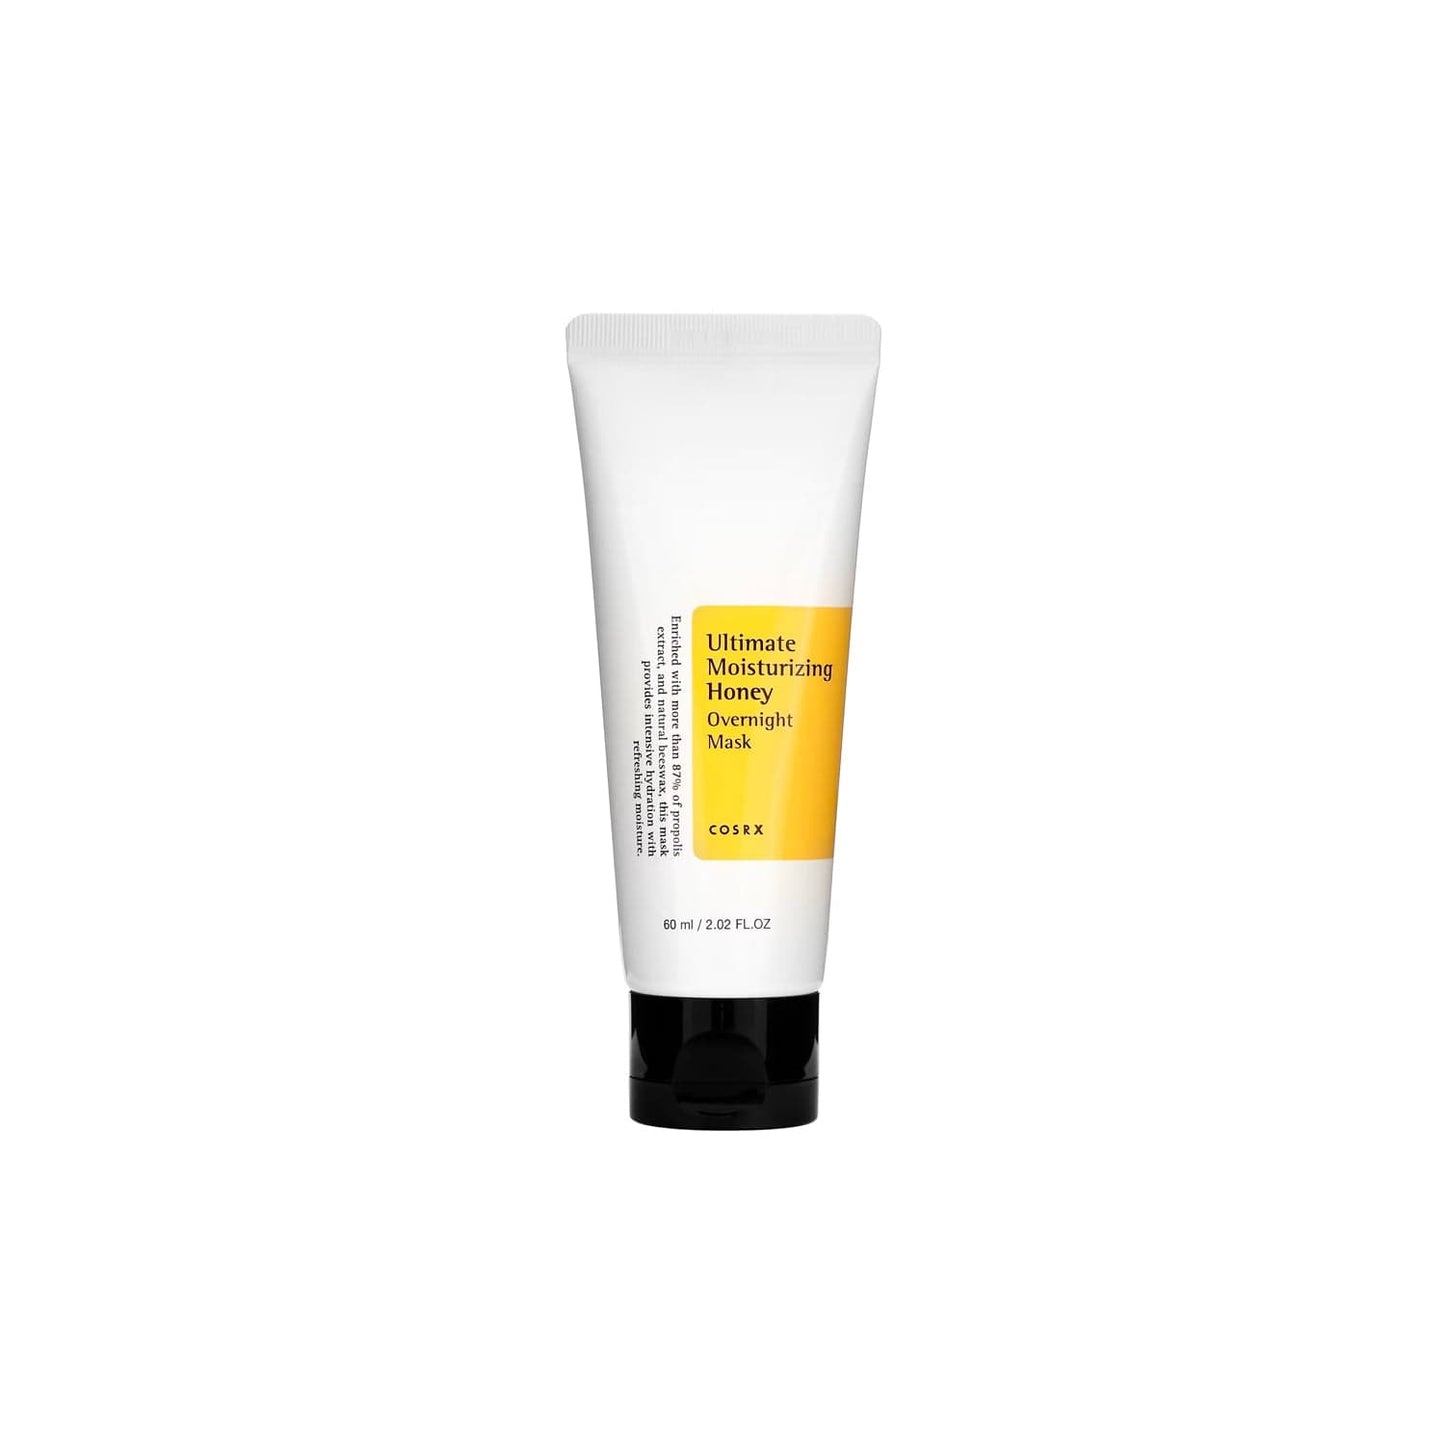 COSRX - Ultimate moisturizing honey overnight mask - 60 ml - COSRX - Ethni Beauty Market